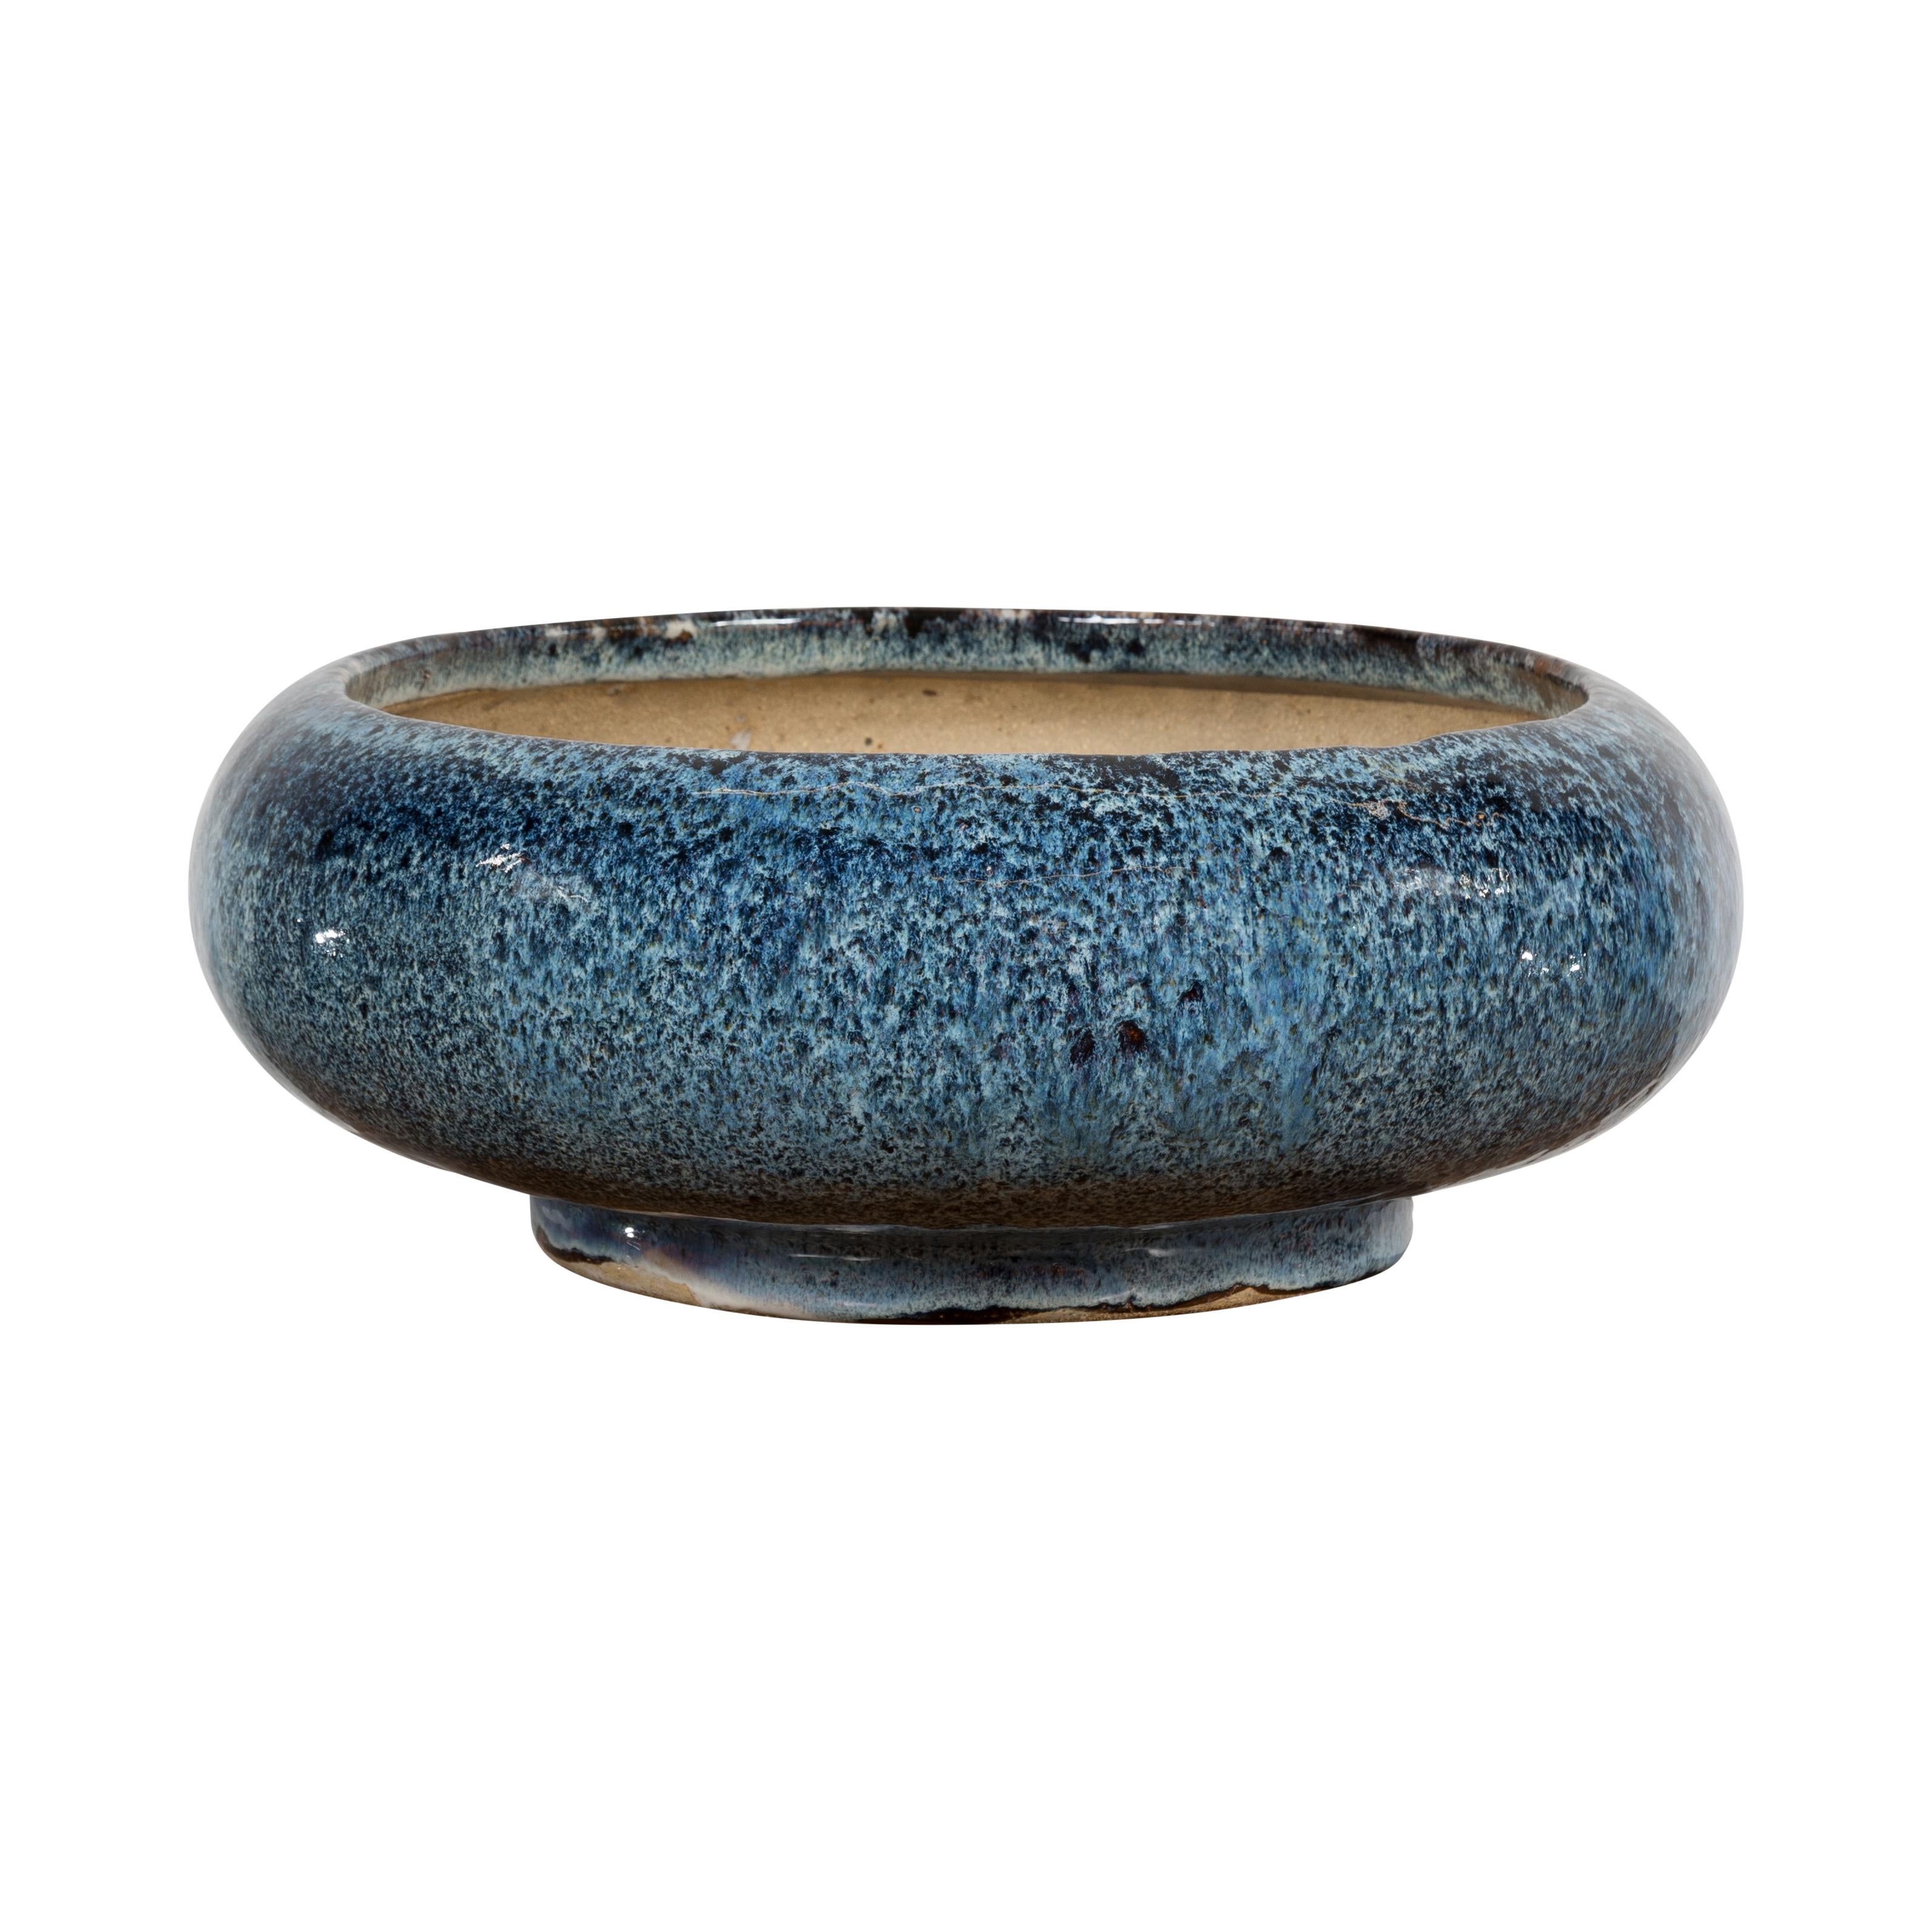 Chinese Vintage Blue Glaze Ceramic Planter For Sale 9